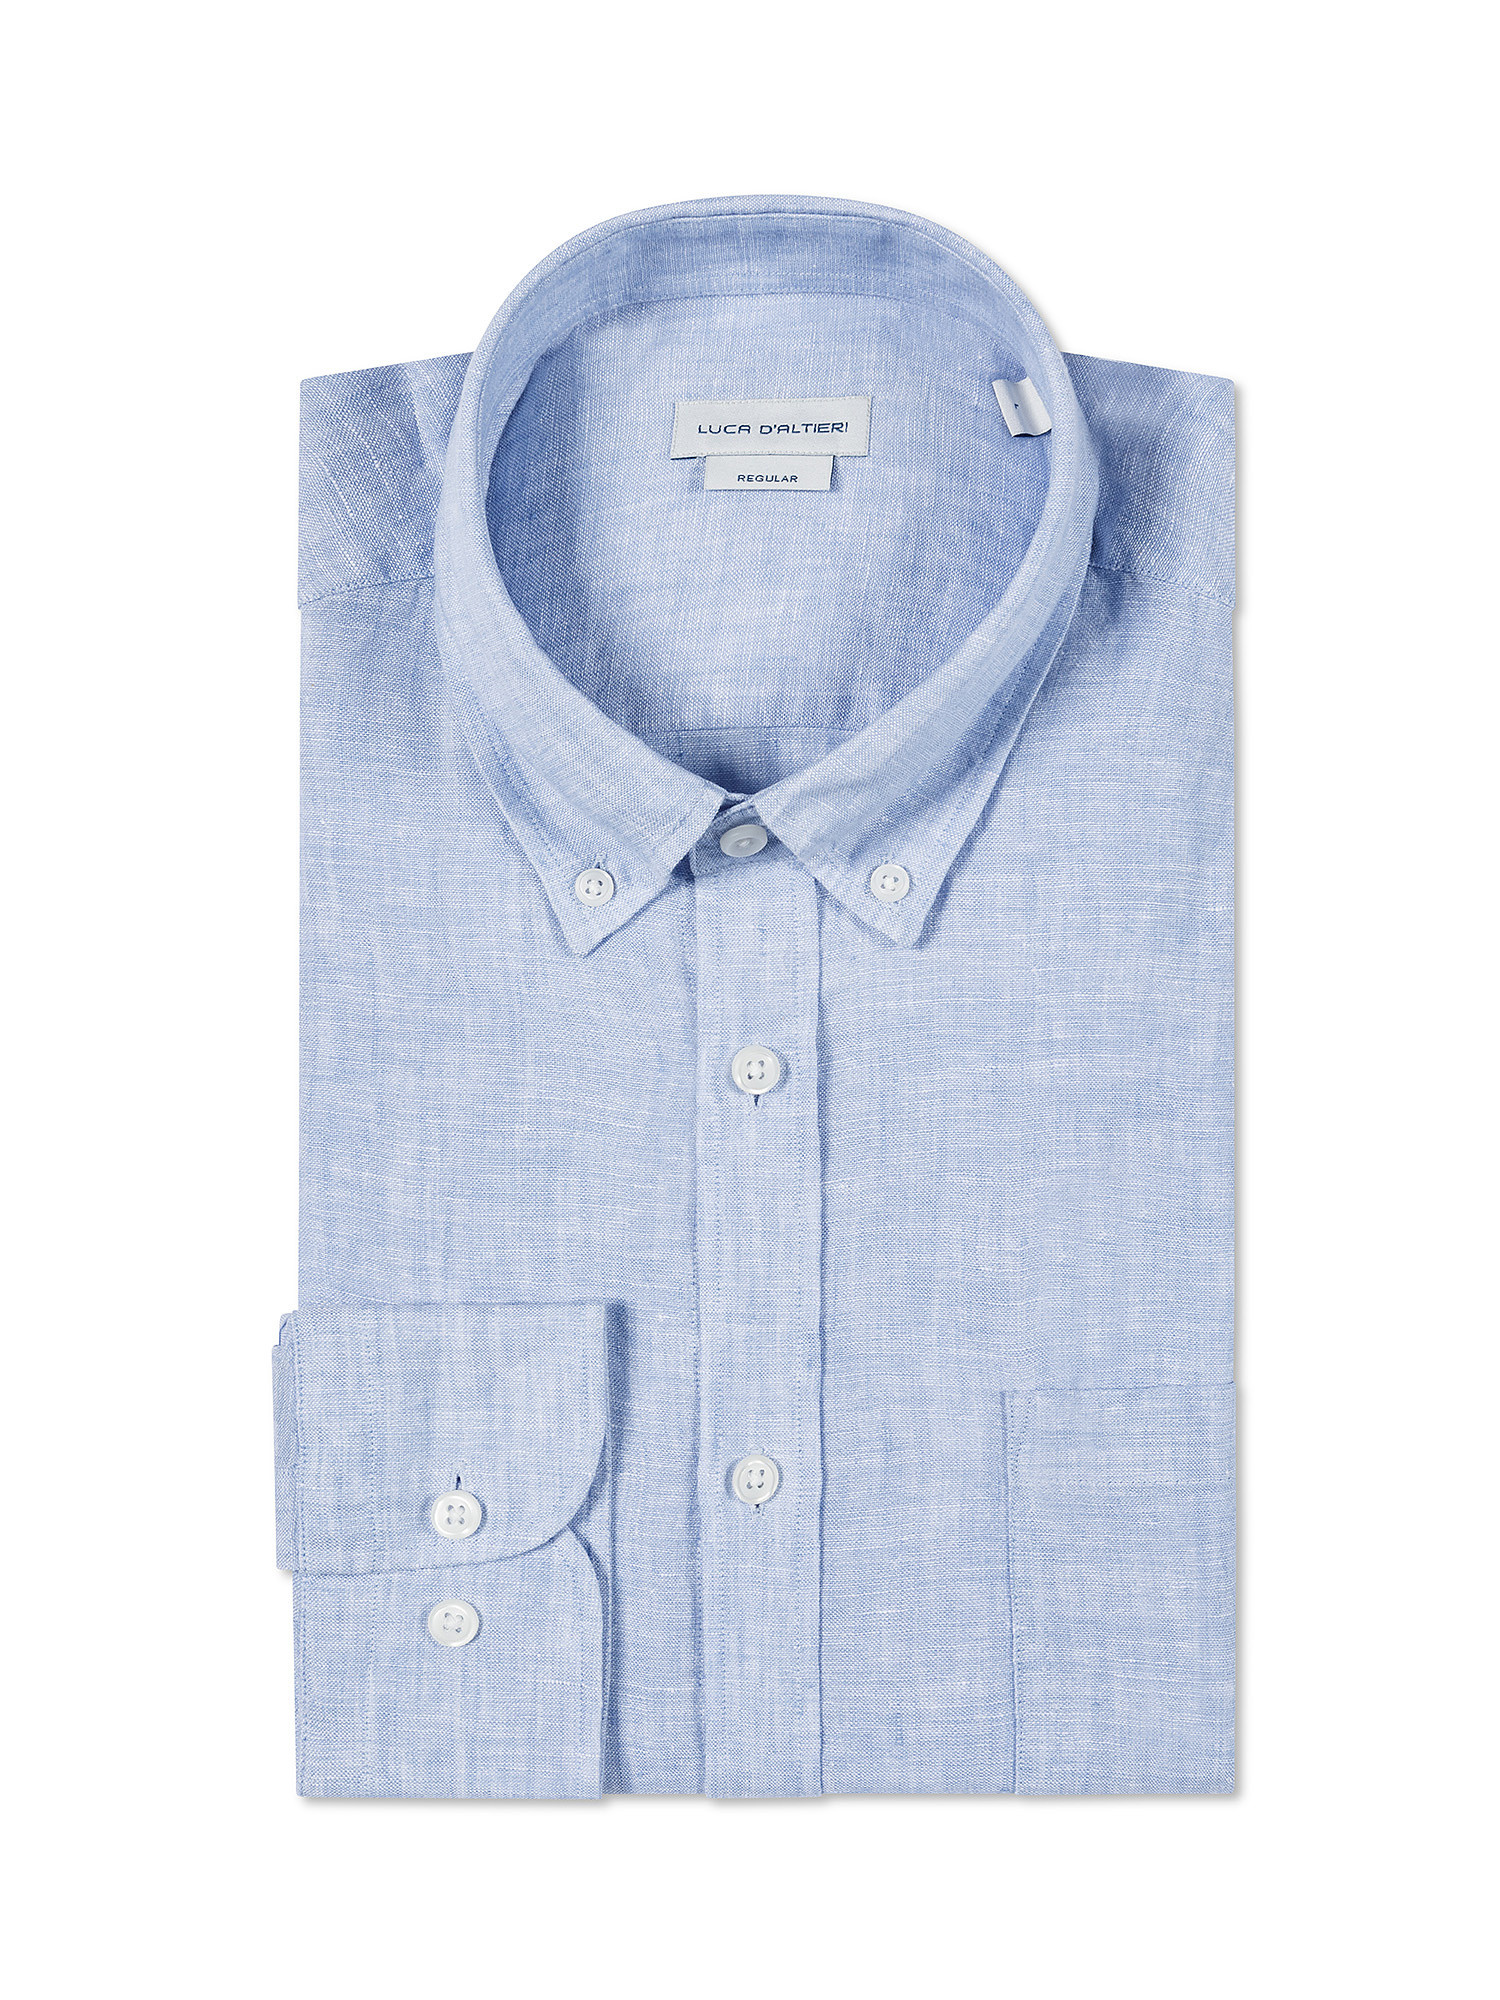 Luca D'Altieri - Regular fit shirt in pure linen, Light Blue, large image number 2